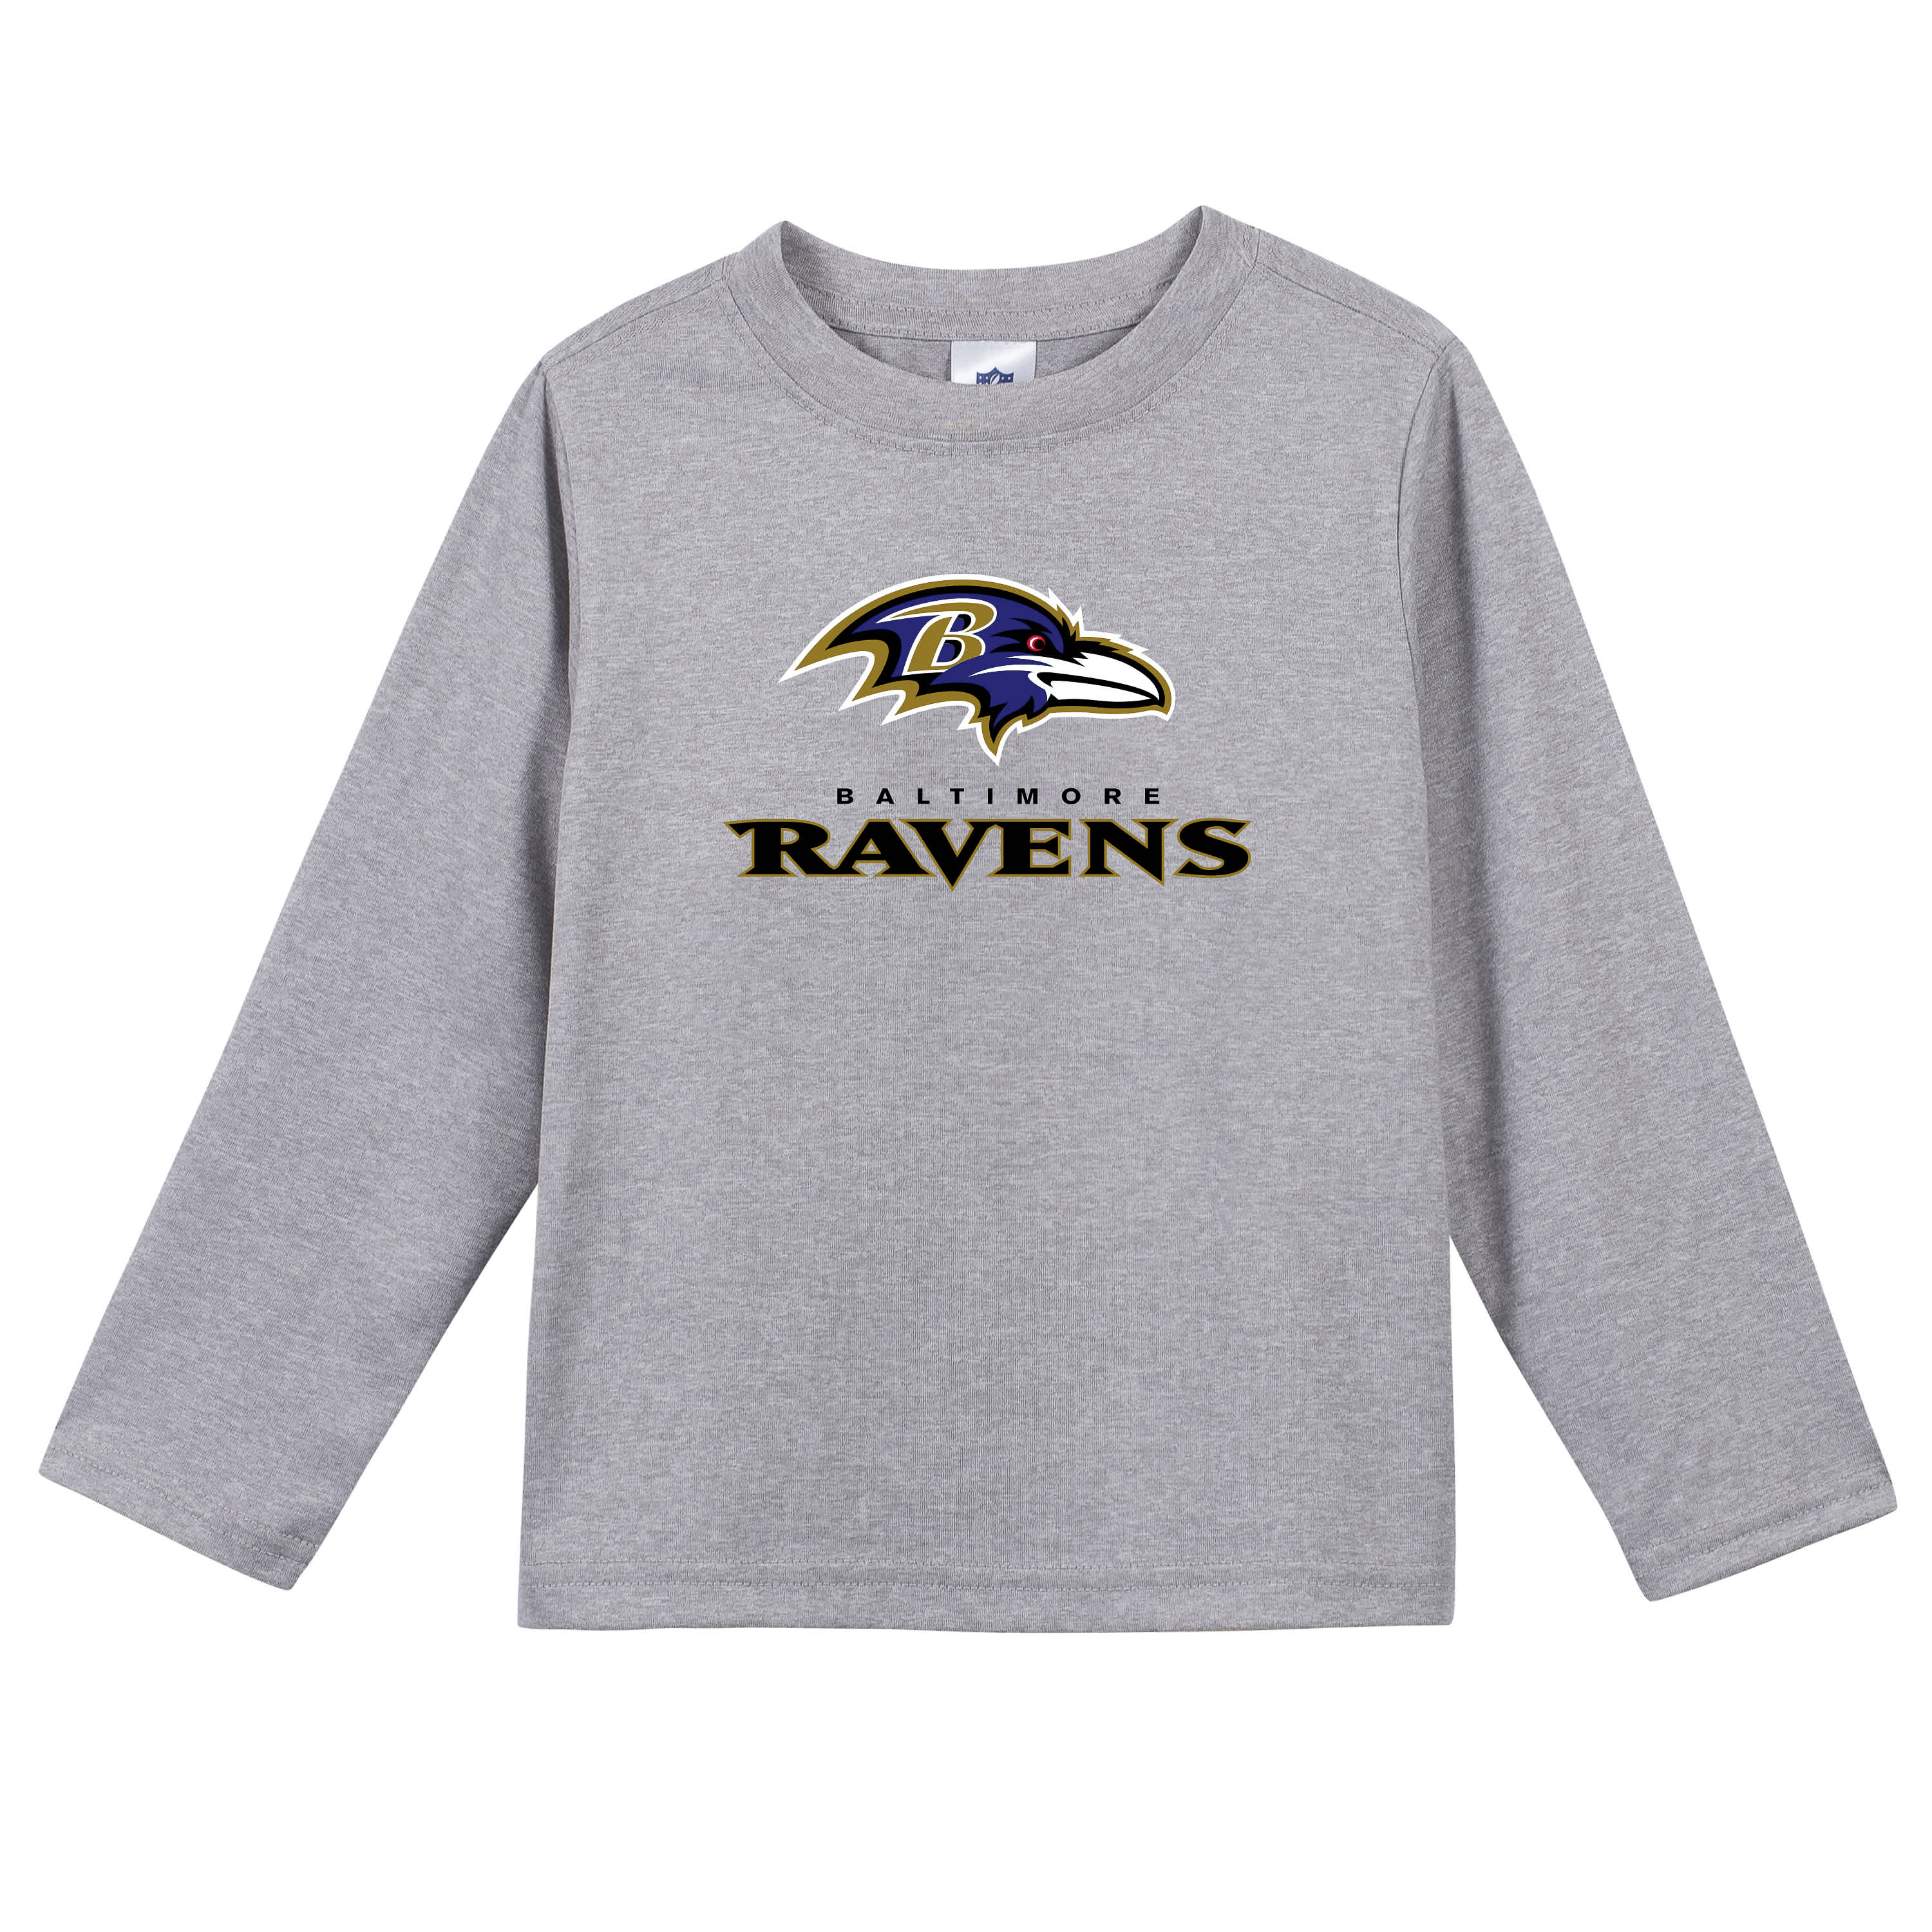 Baltimore Ravens Boys Long Sleeve Tee Shirt